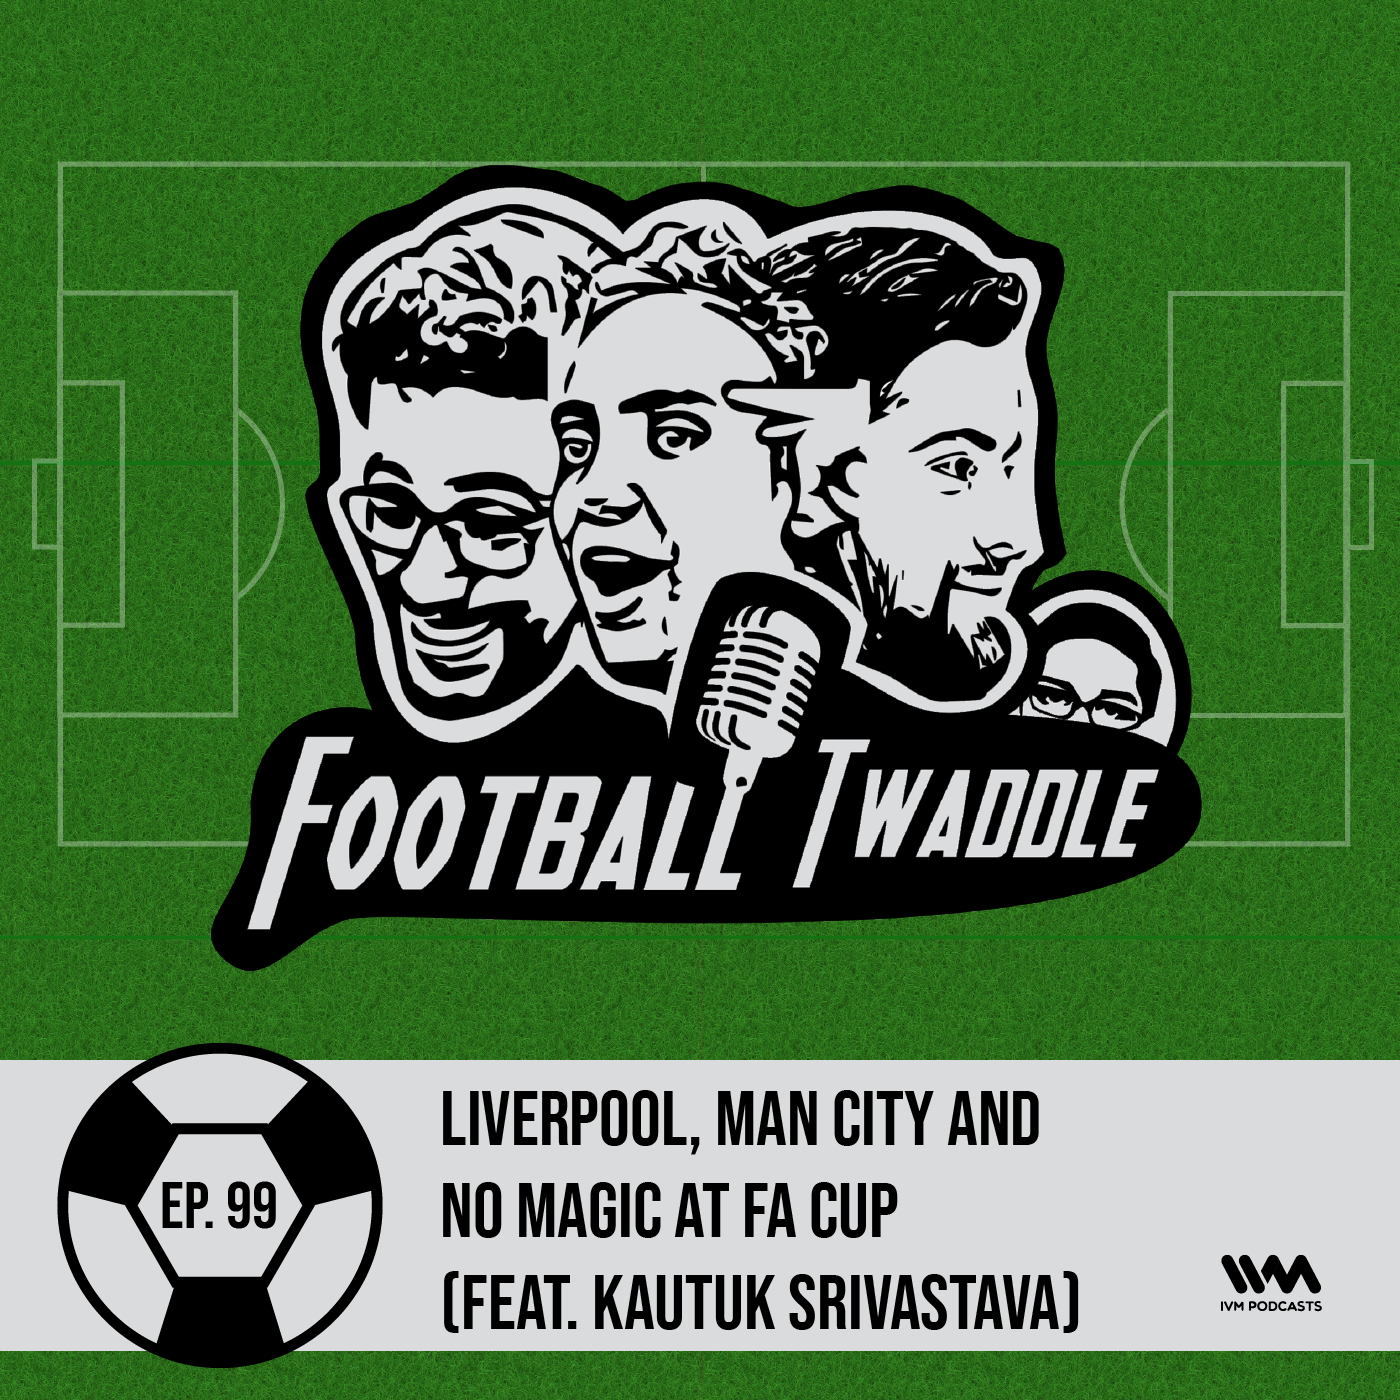 Liverpool, Man City and No magic at FA Cup (feat. Kautuk Srivastava)